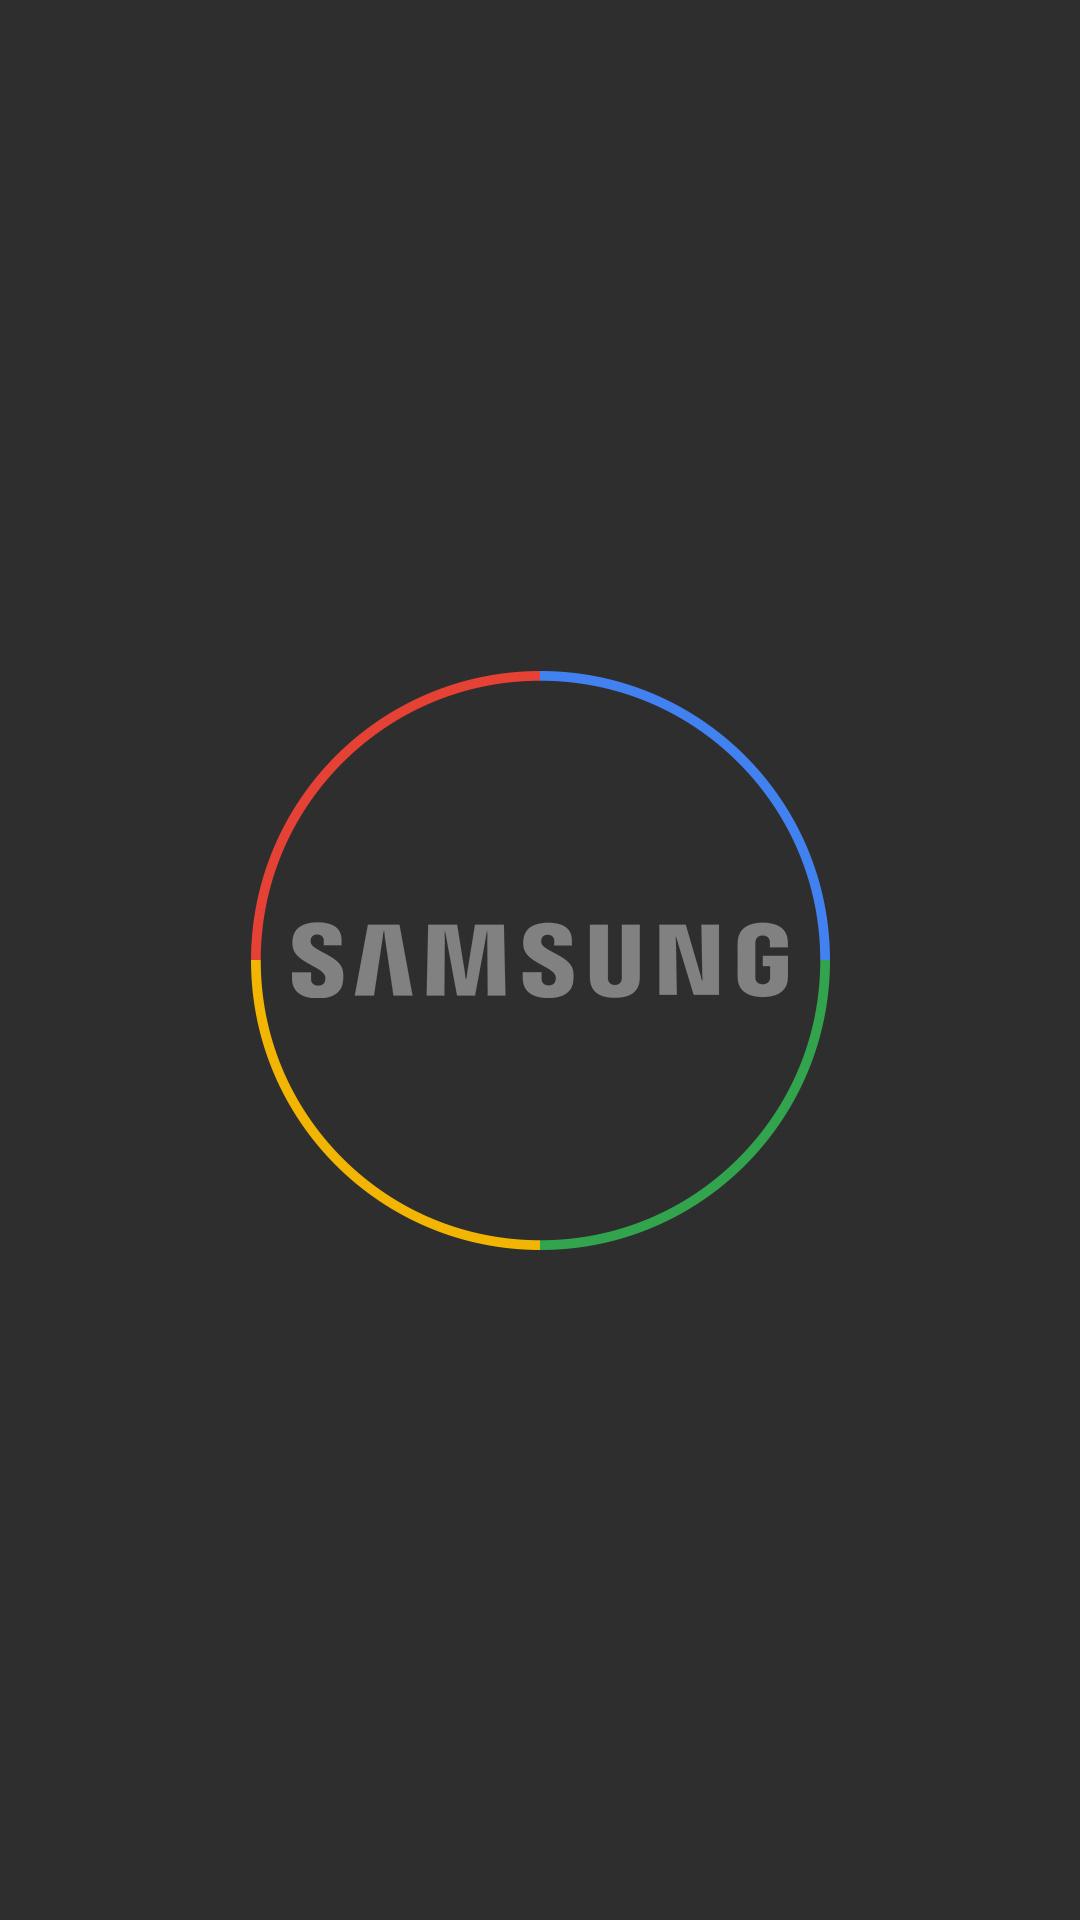 Download Gambar Wallpaper Hd Android Samsung terbaru 2020